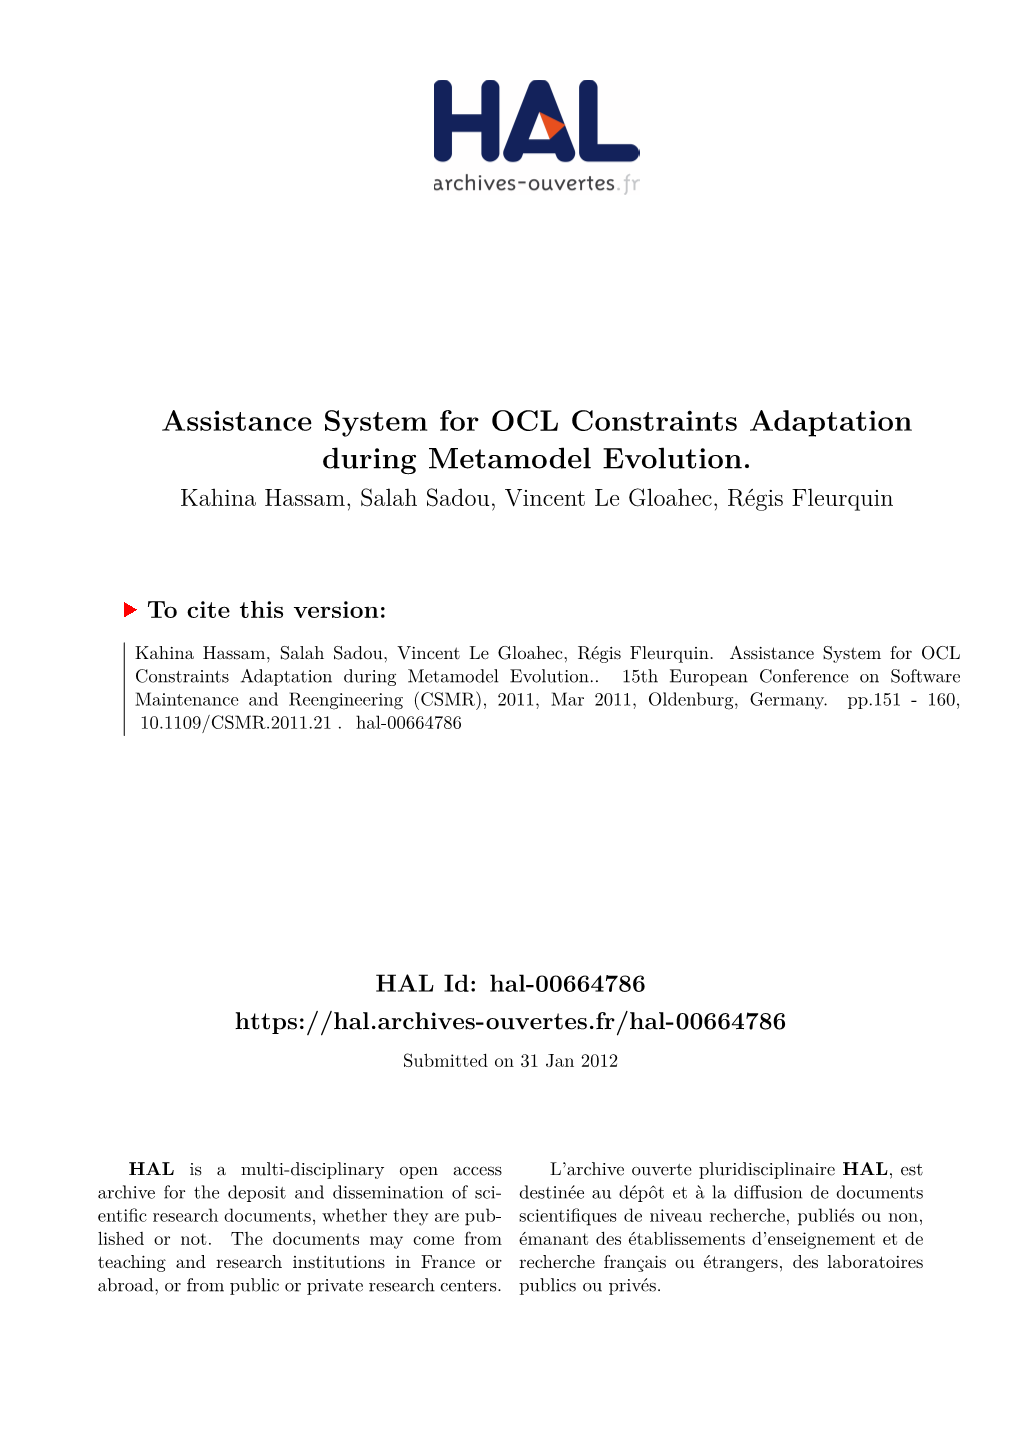 Assistance System for OCL Constraints Adaptation During Metamodel Evolution